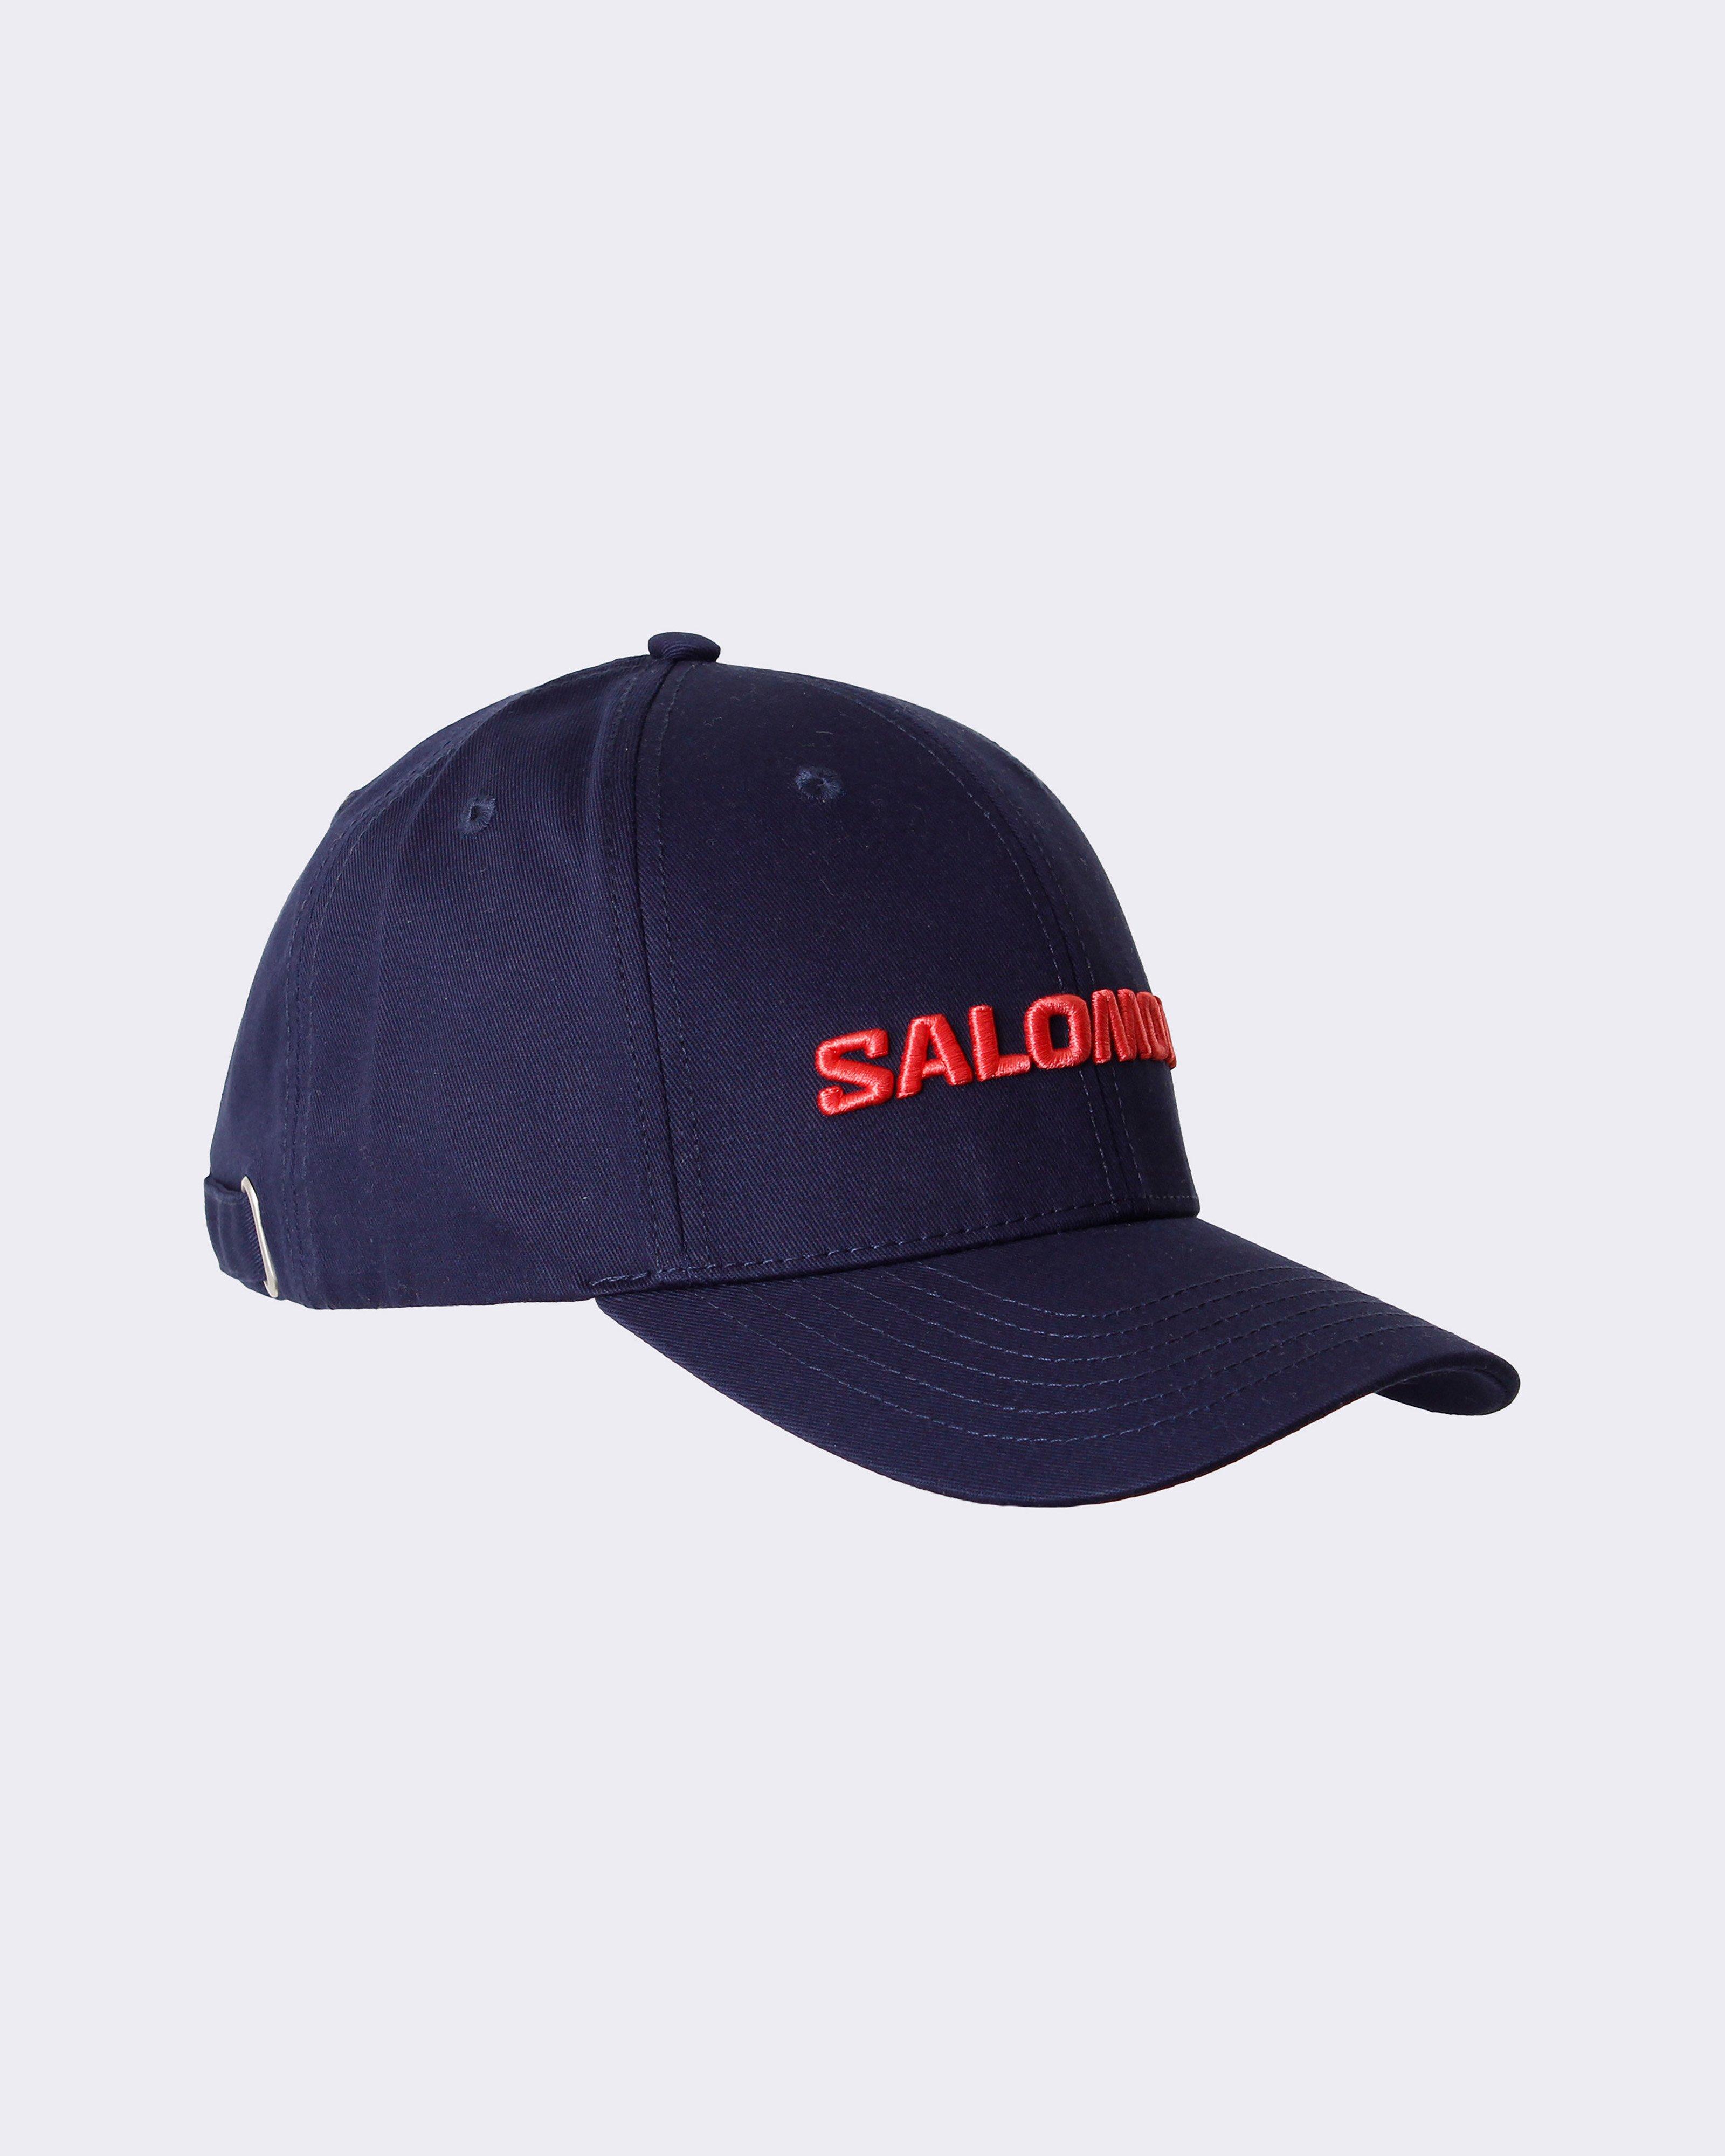 Salomon Adjustable Cap -  Navy